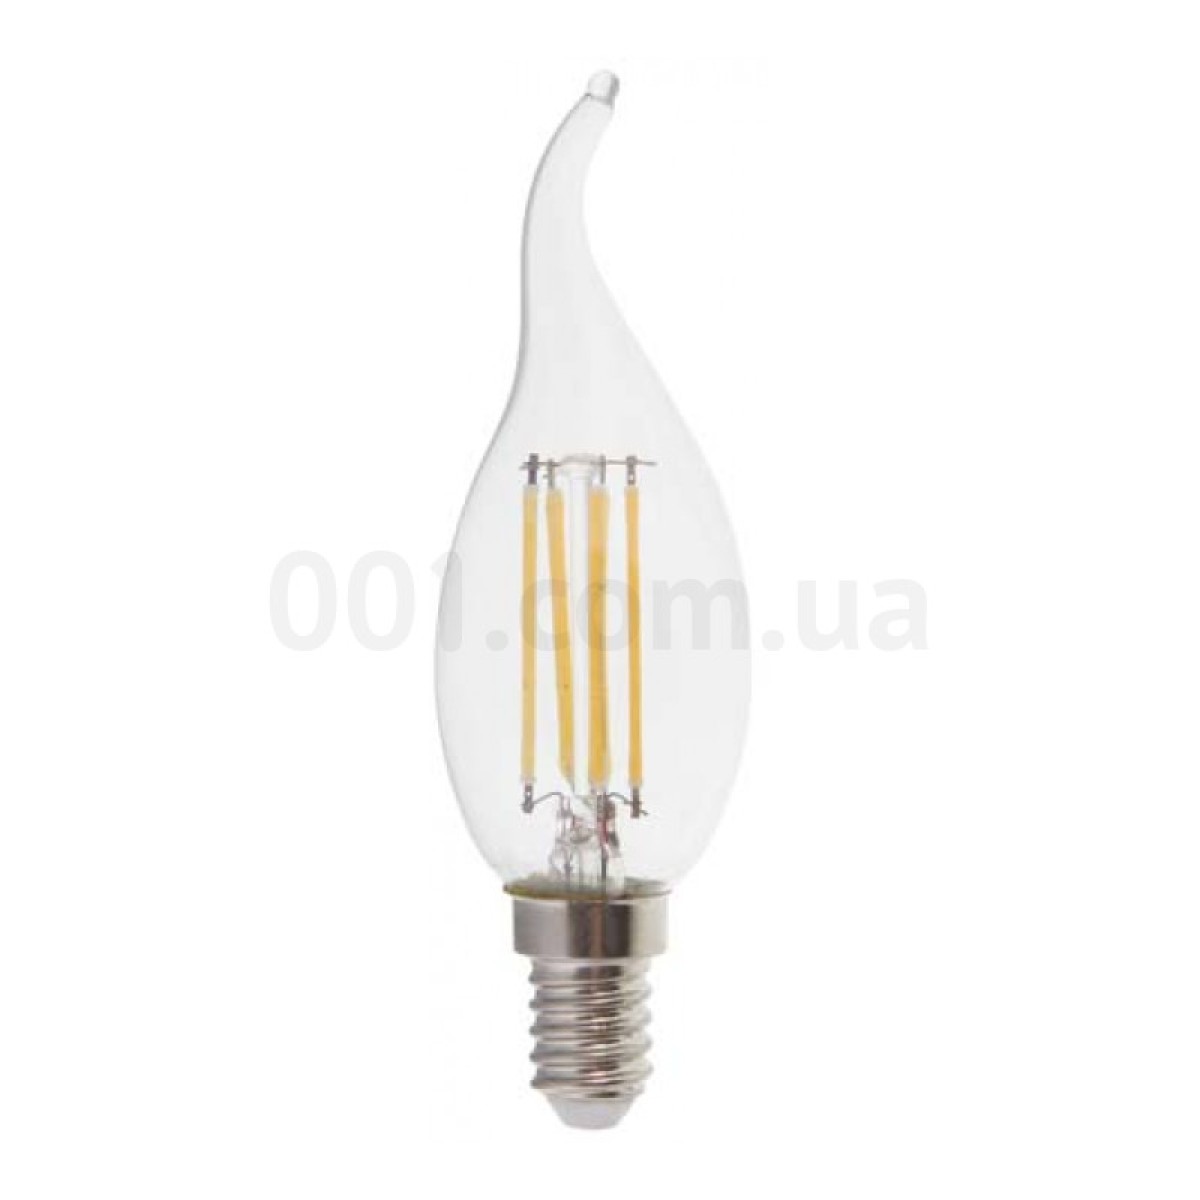 Светодиодная лампа LB-59 CF37 (свеча на ветру) филамент 4Вт 2700K E14, Feron 98_98.jpg